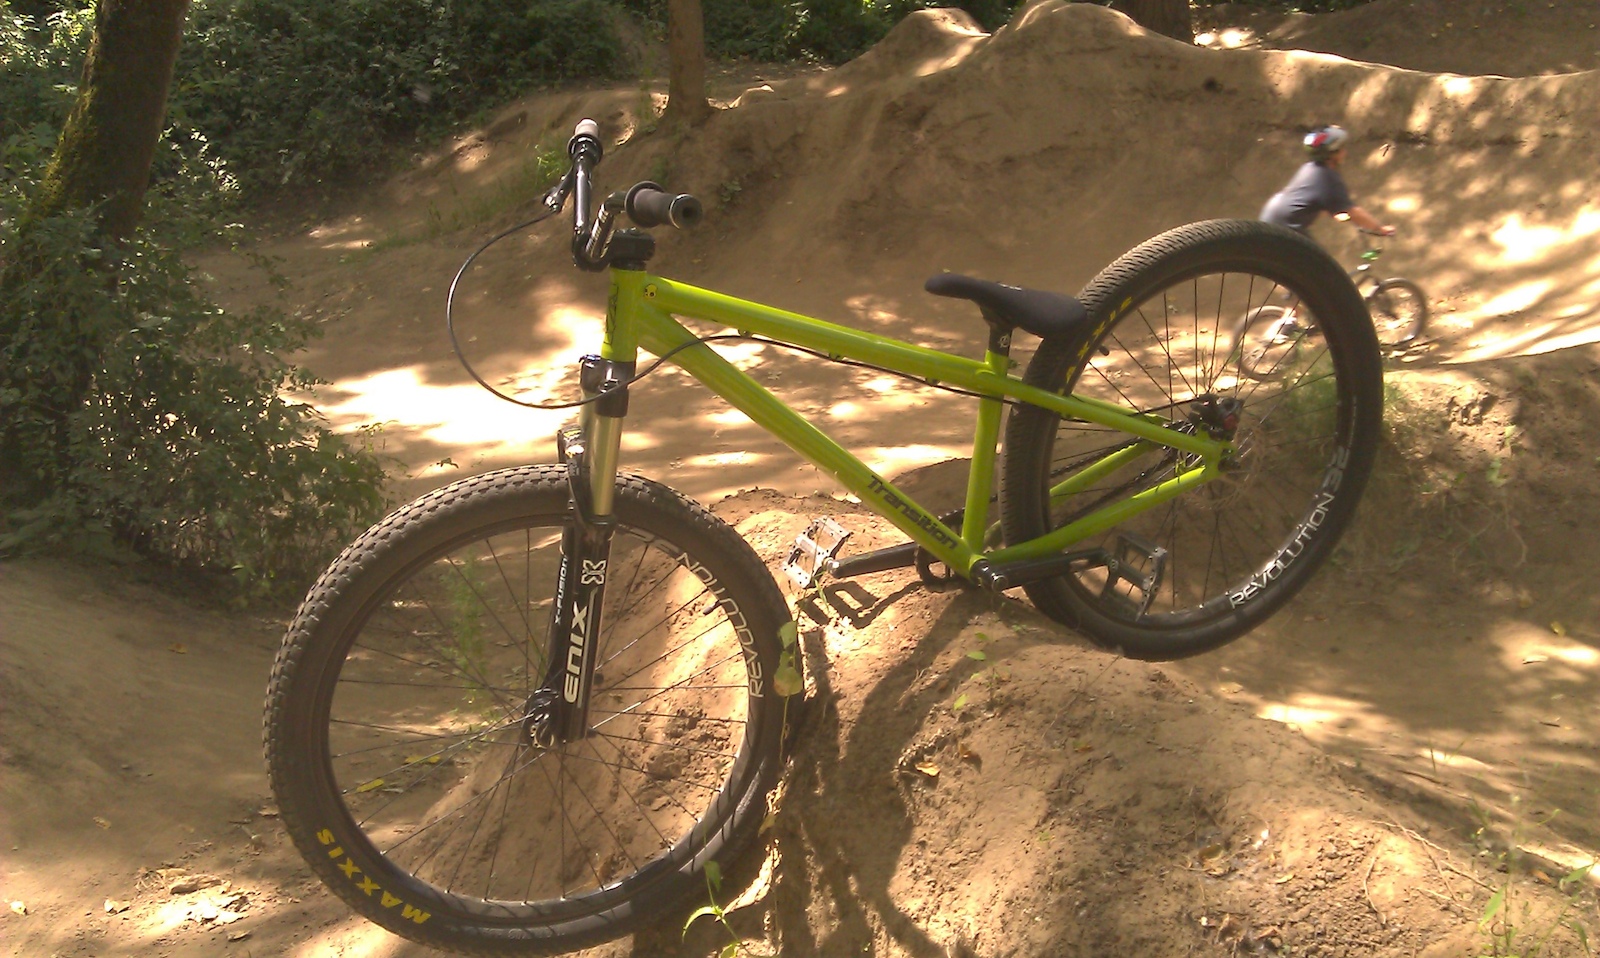 my bike at bryants park dirt jumps